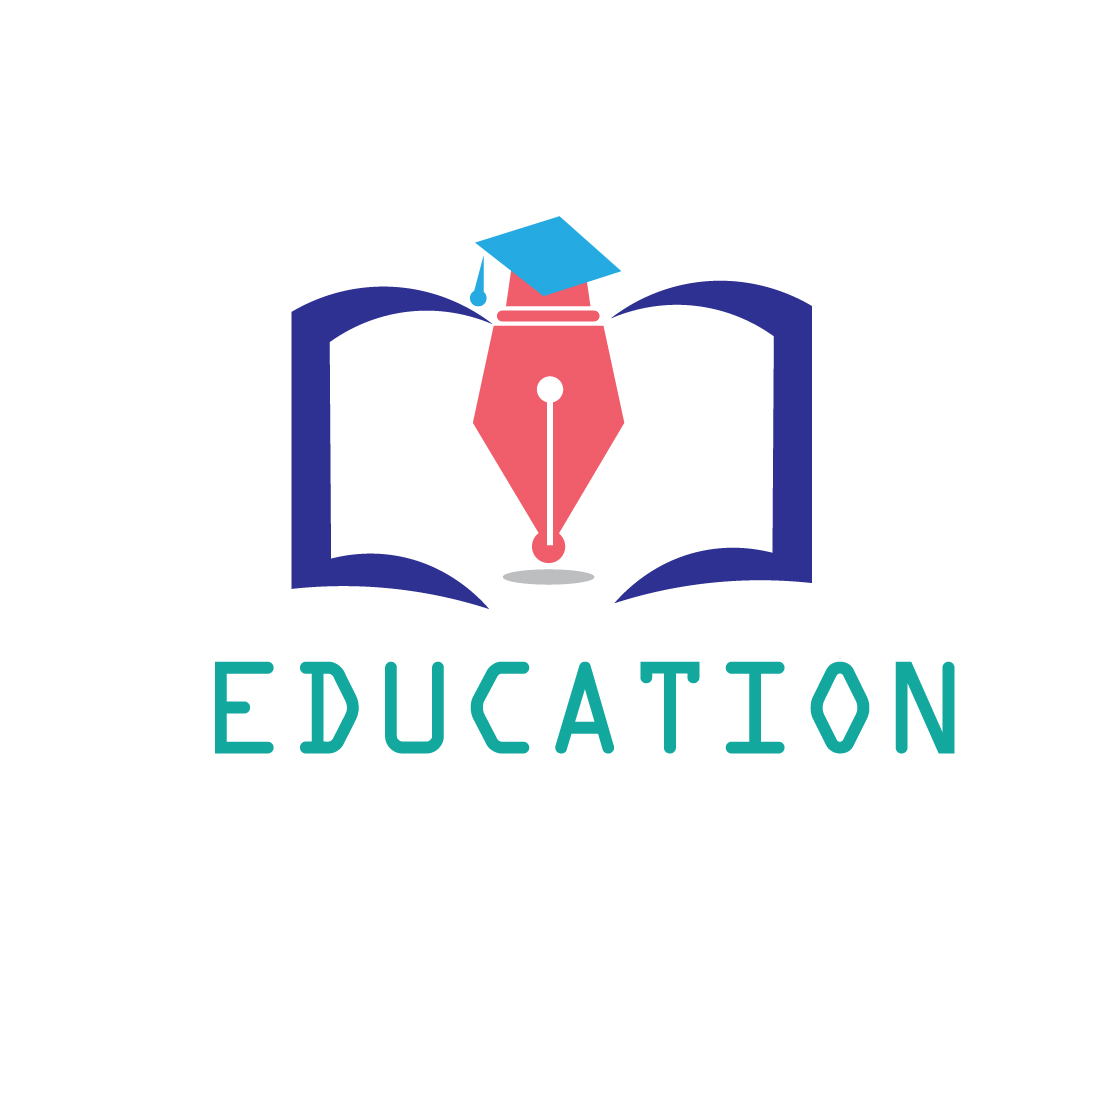 education or graduate logo cover image.